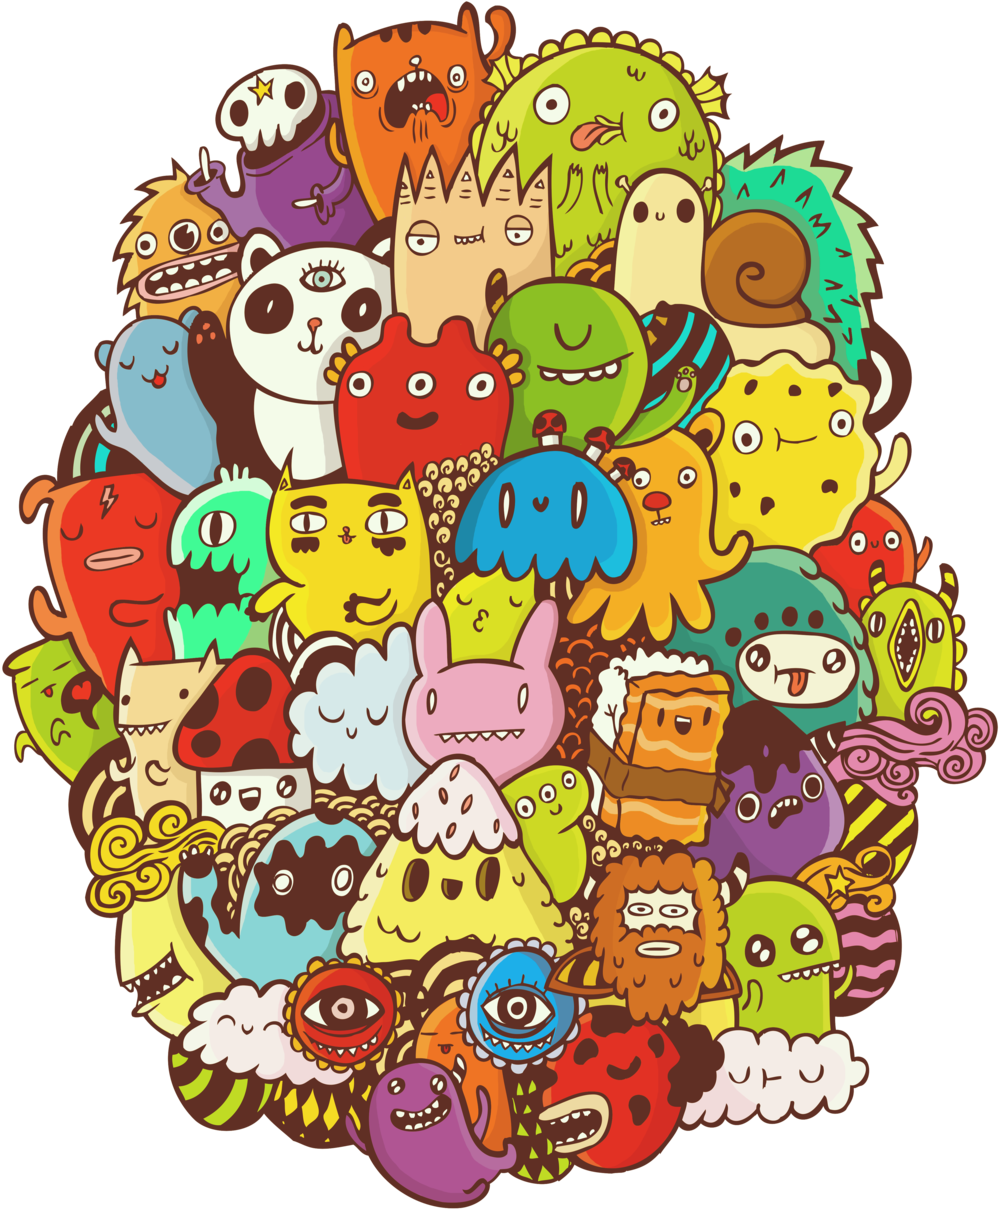 Download Colored Doodle By Doodlebros On Deviantart Clip Black Doodle Monster Colored Png Image With No Background Pngkey Com